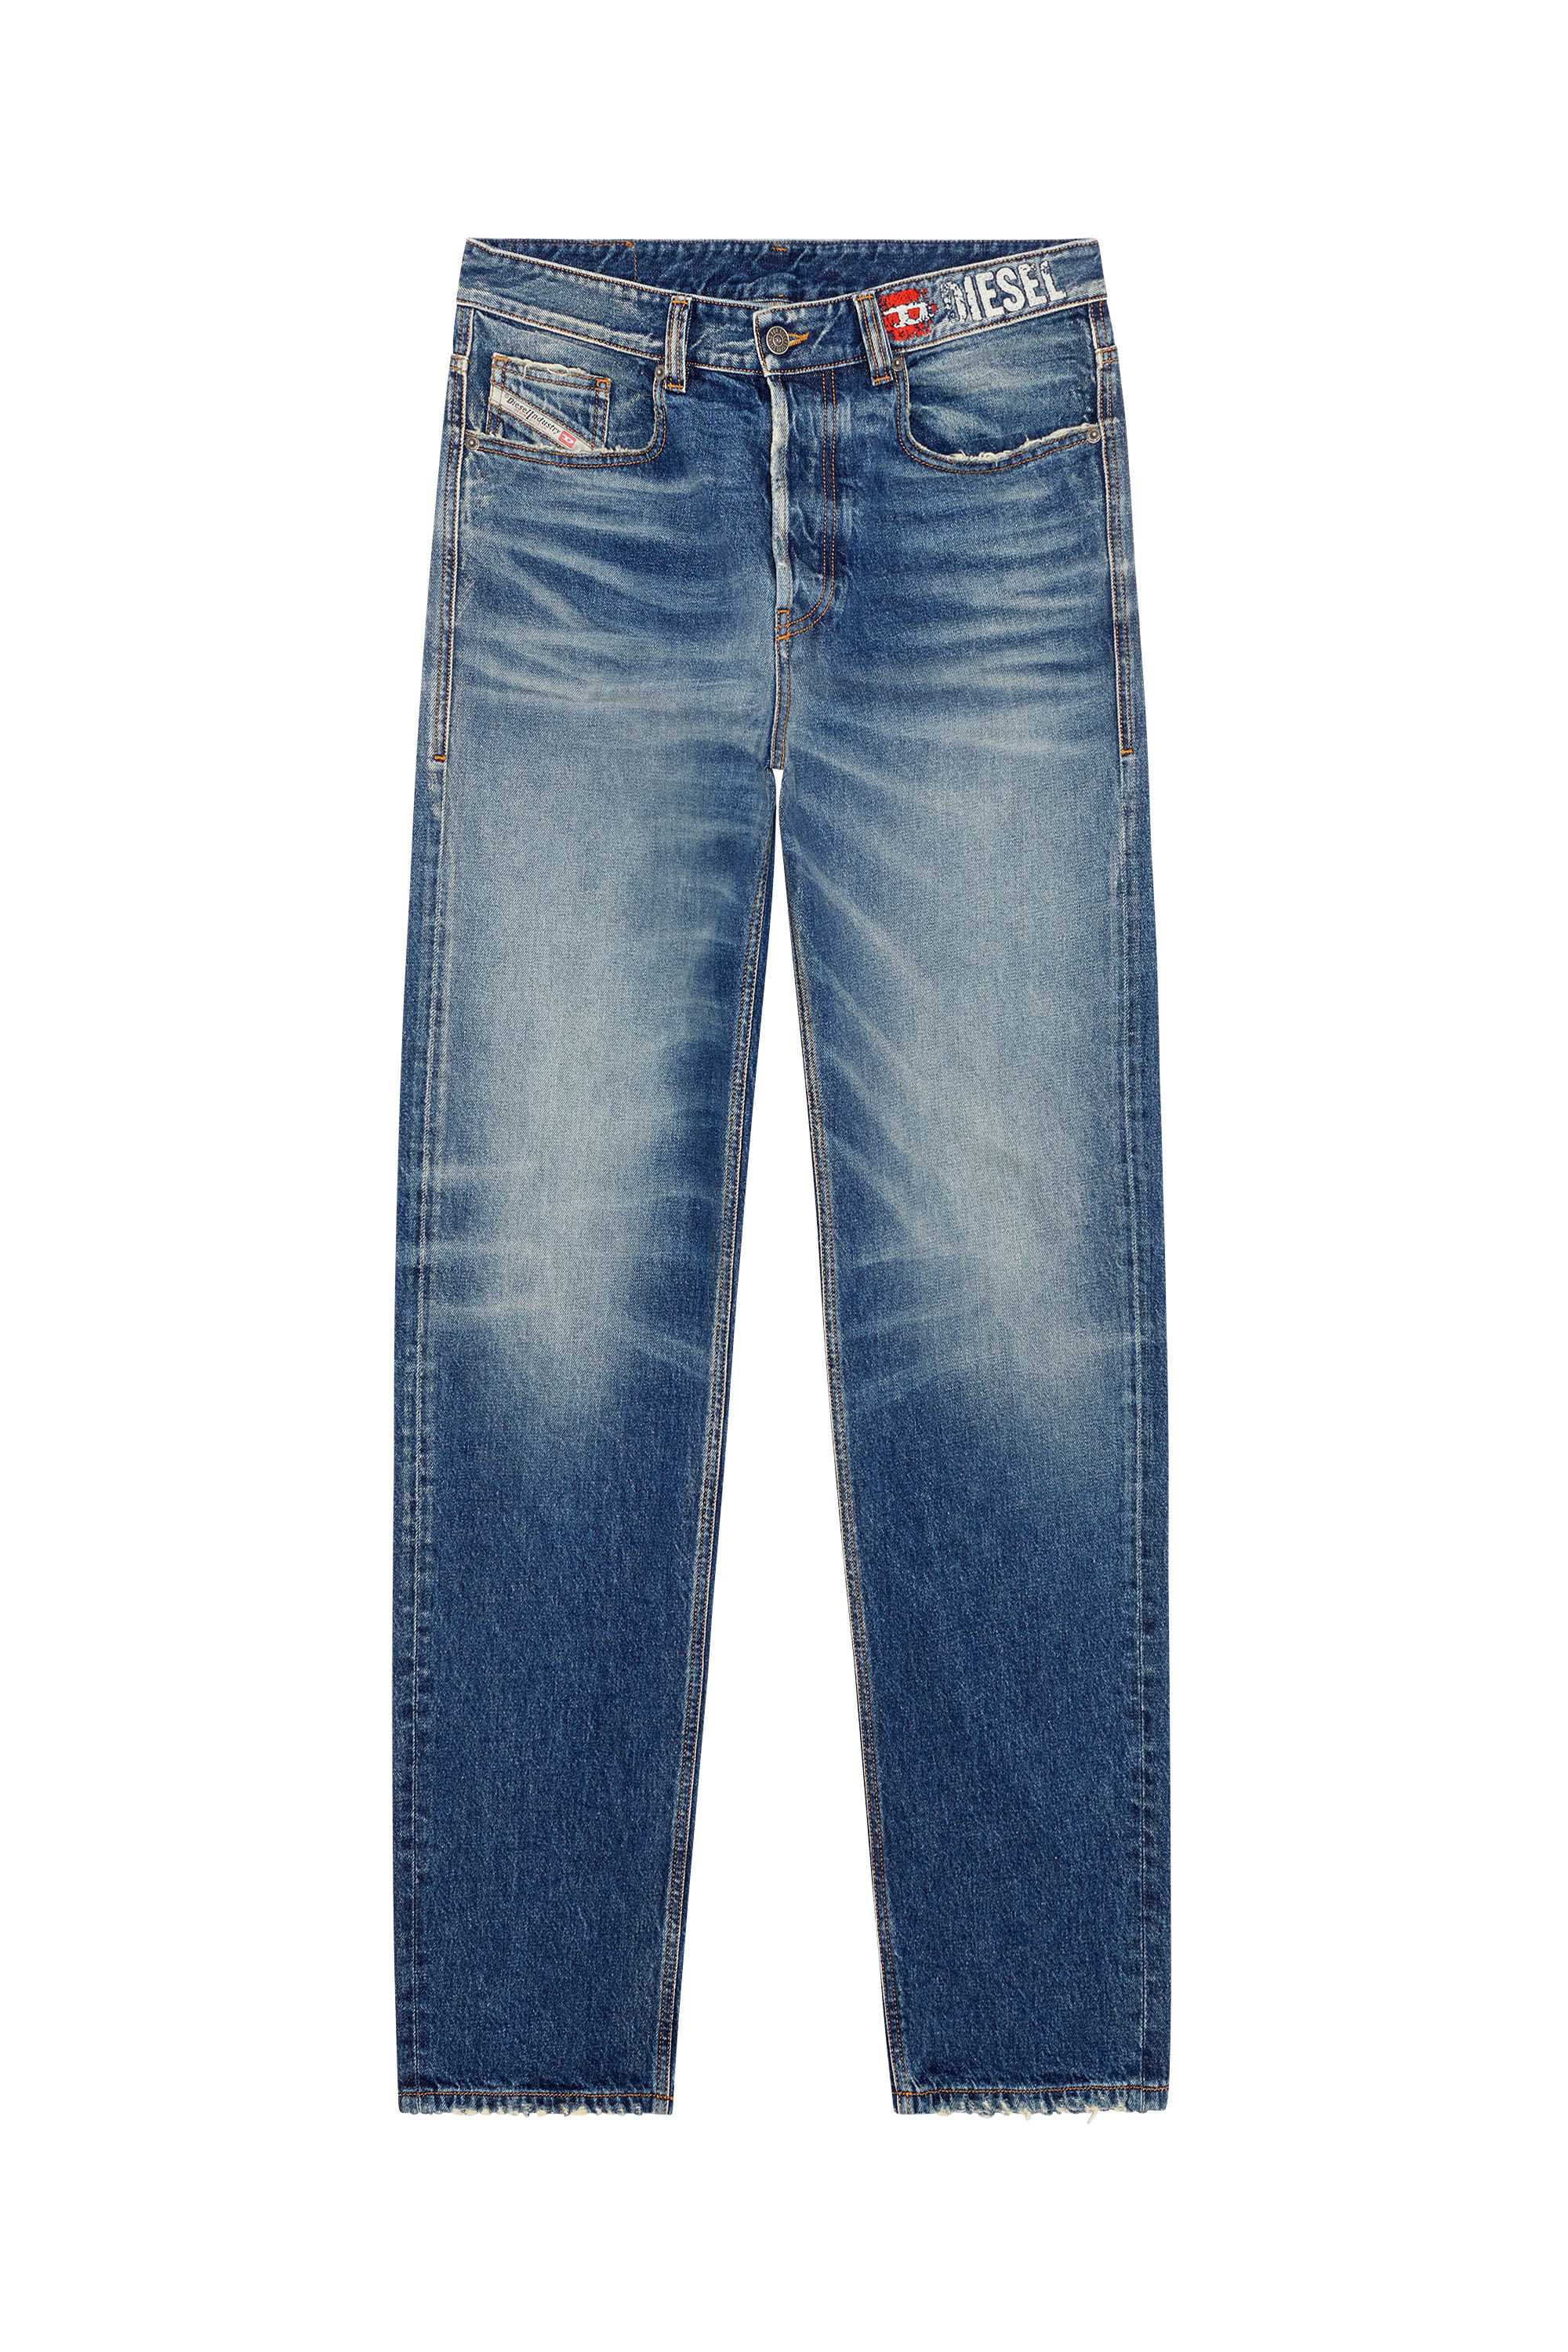 Men's Straight Jeans | Medium blue | Diesel 2010 D-Macs